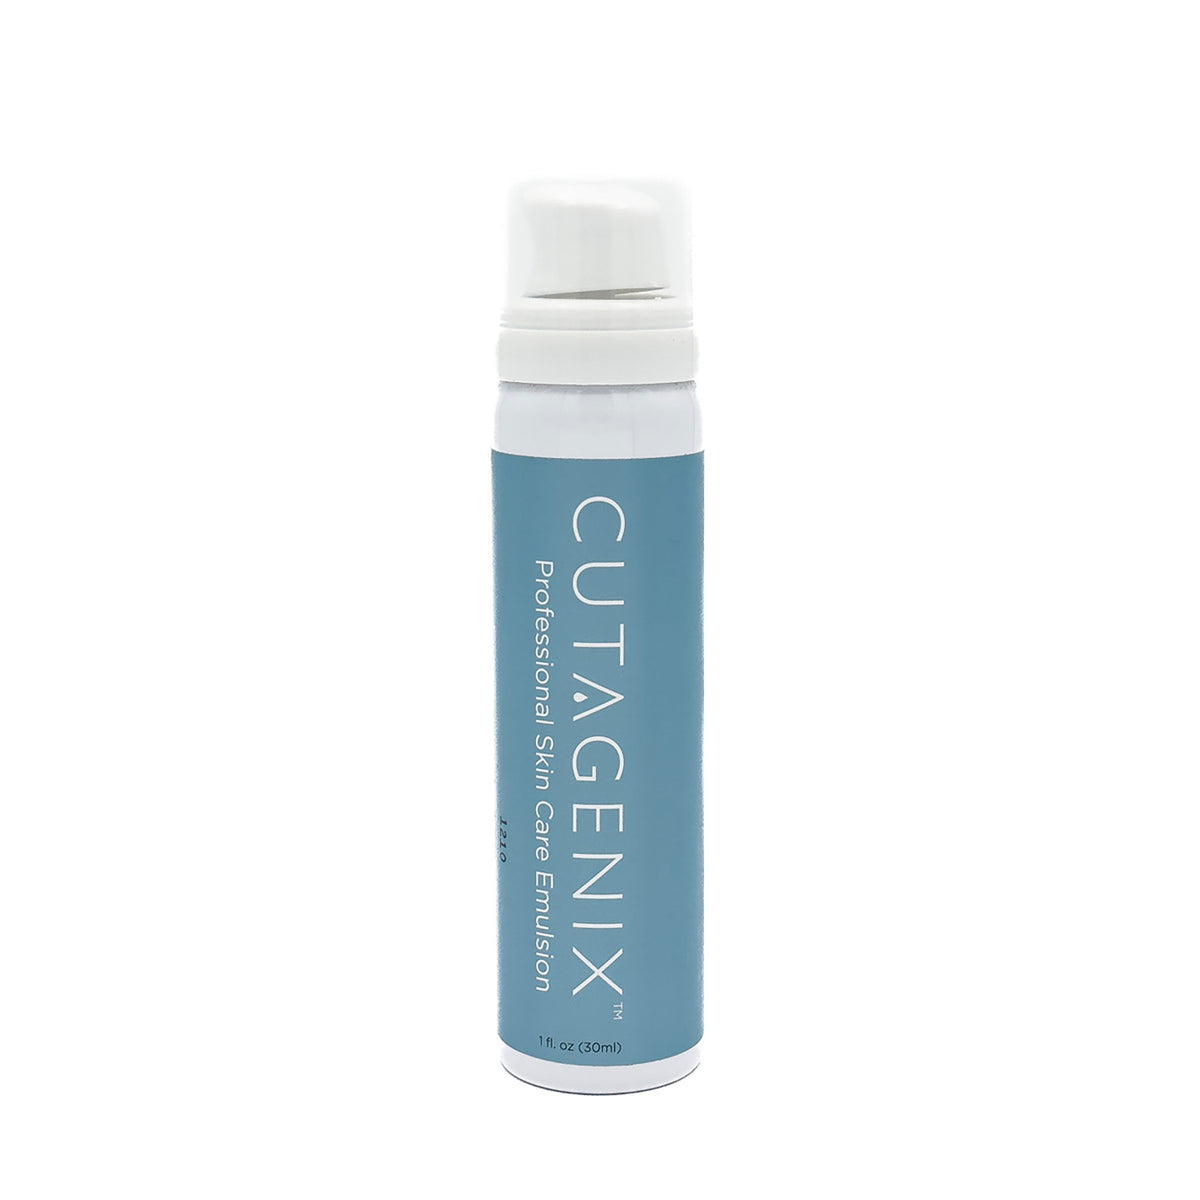 Cutagenix™ Professional Skin Care Emulsion